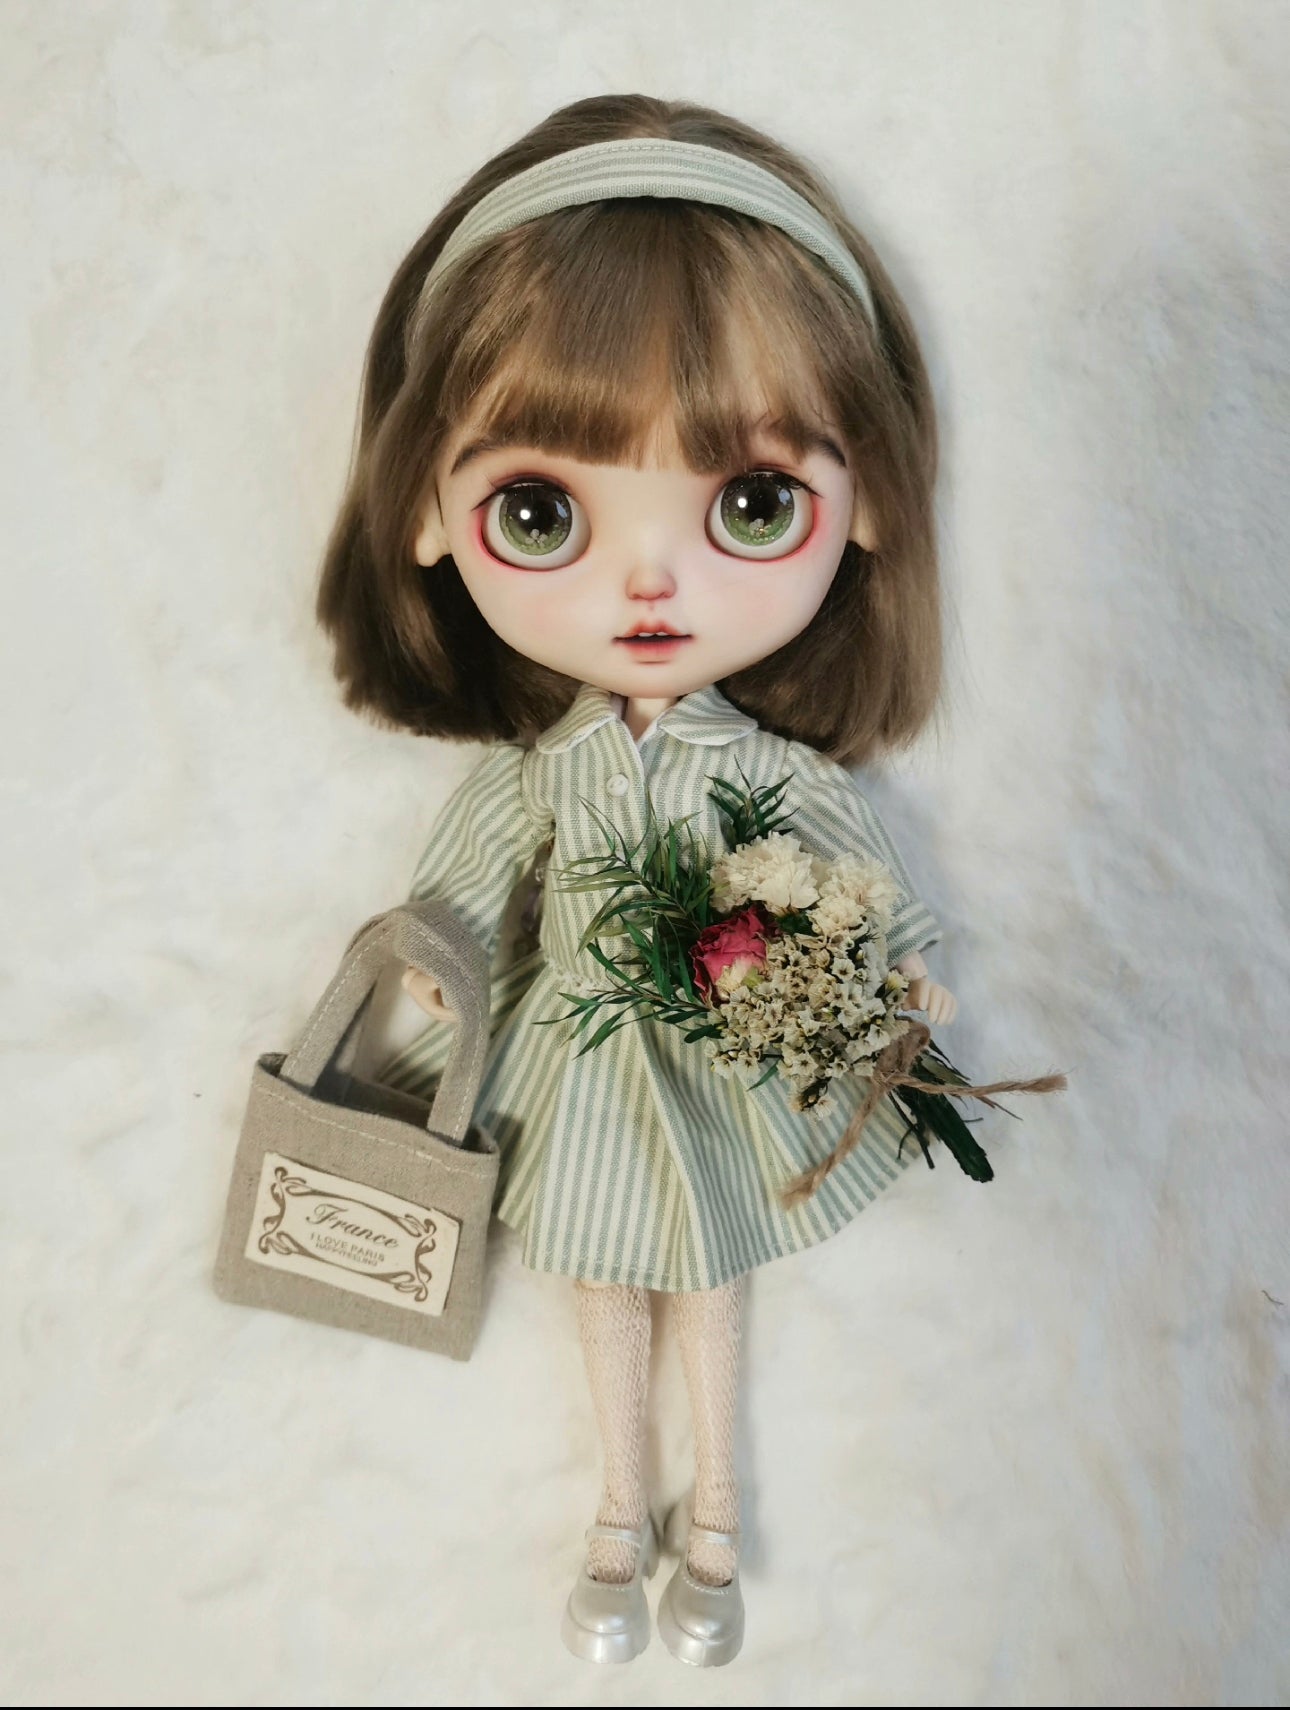 Halloween Long Dress Night Dress for Blythe,BJD 1/6 Doll Clothes Customized 022